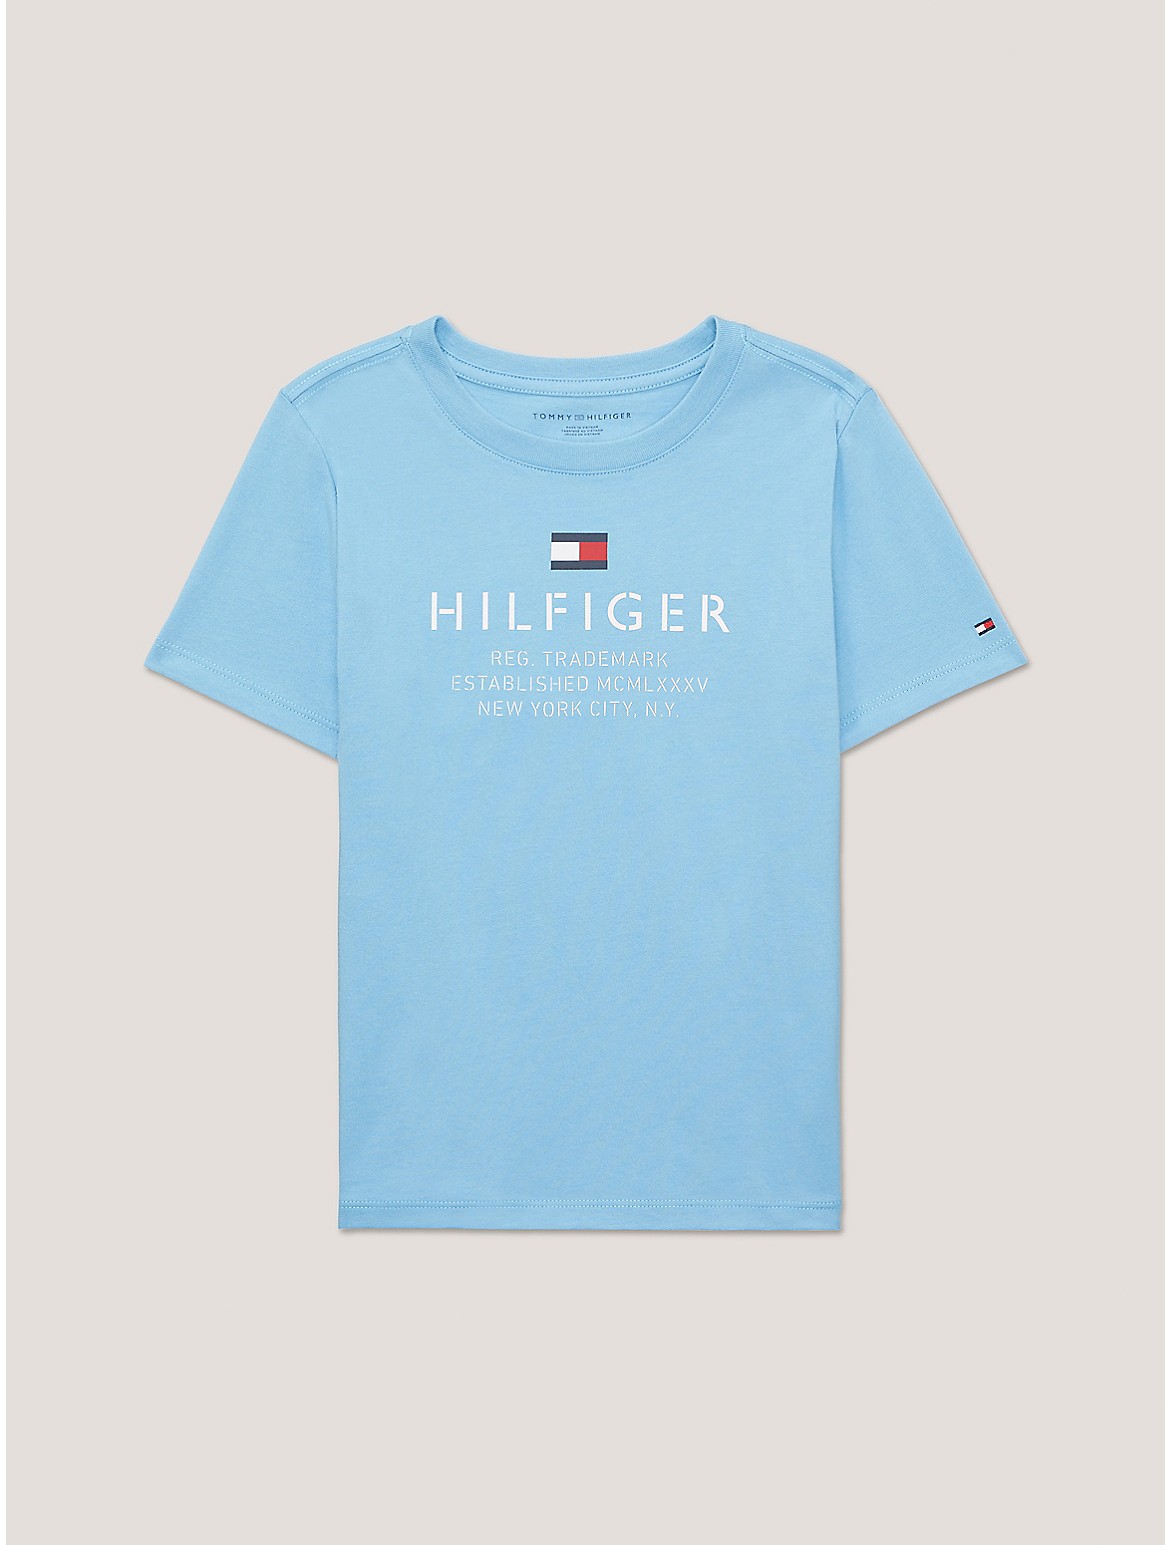 Tommy Hilfiger Boys' Kids' Hilfiger Stencil Logo T-Shirt